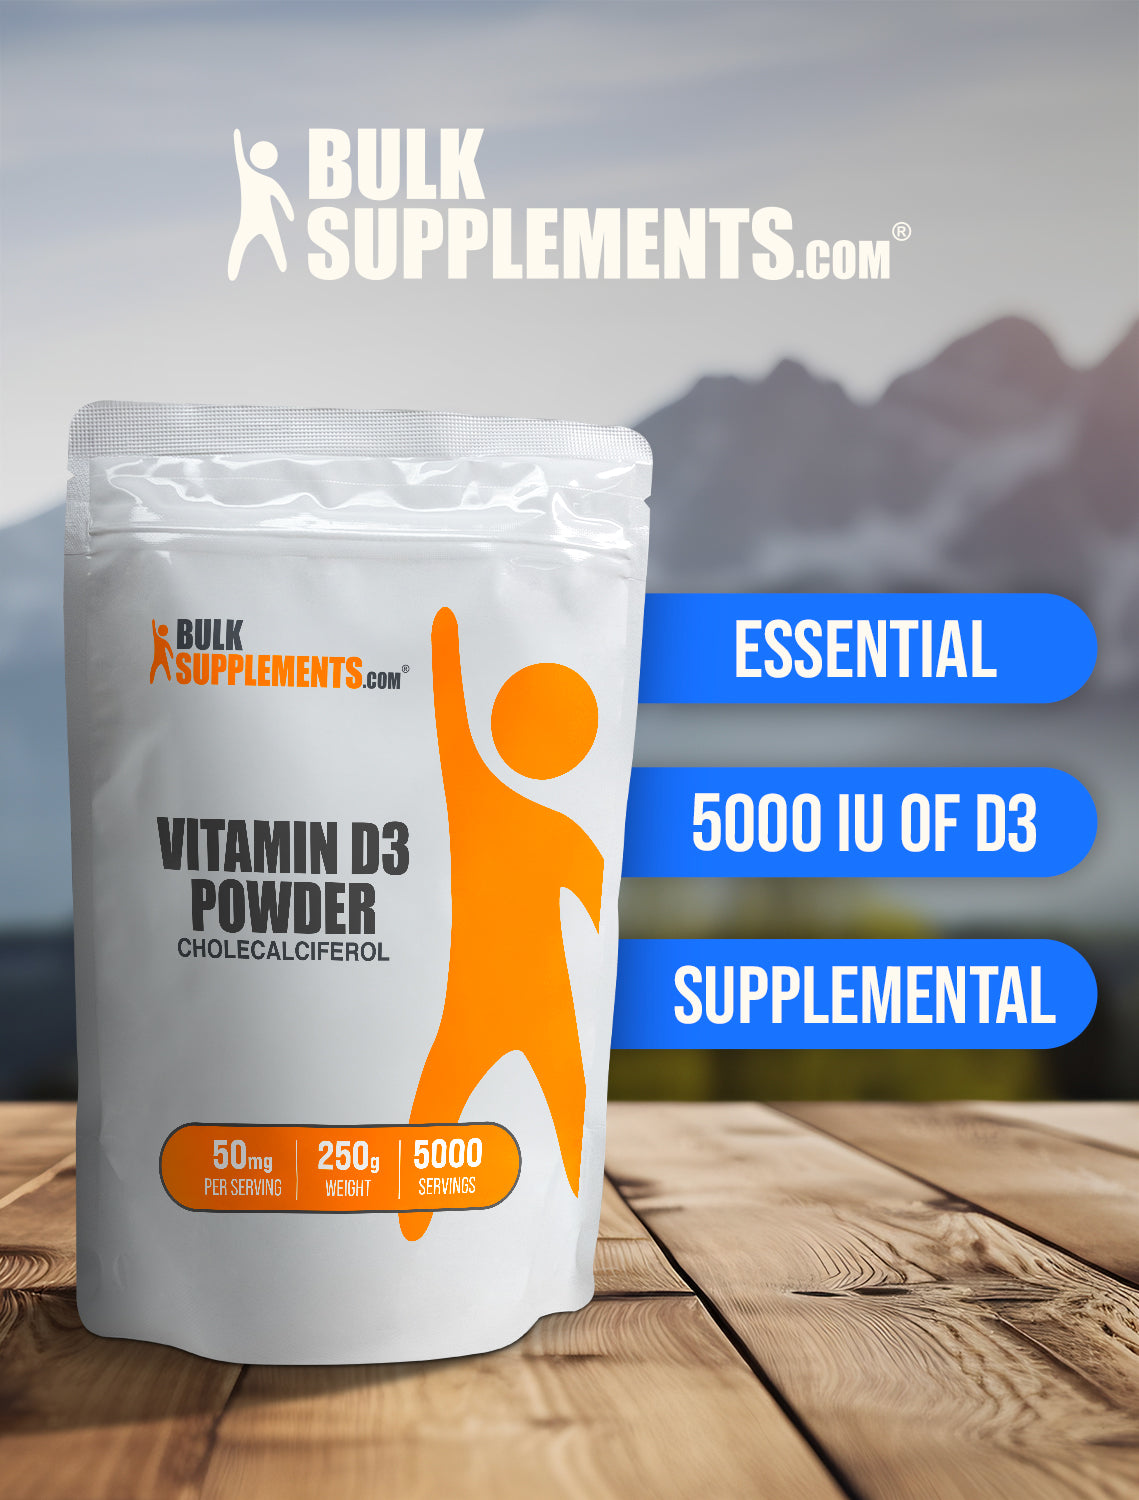 Vitamin D3 powder keyword image 250g